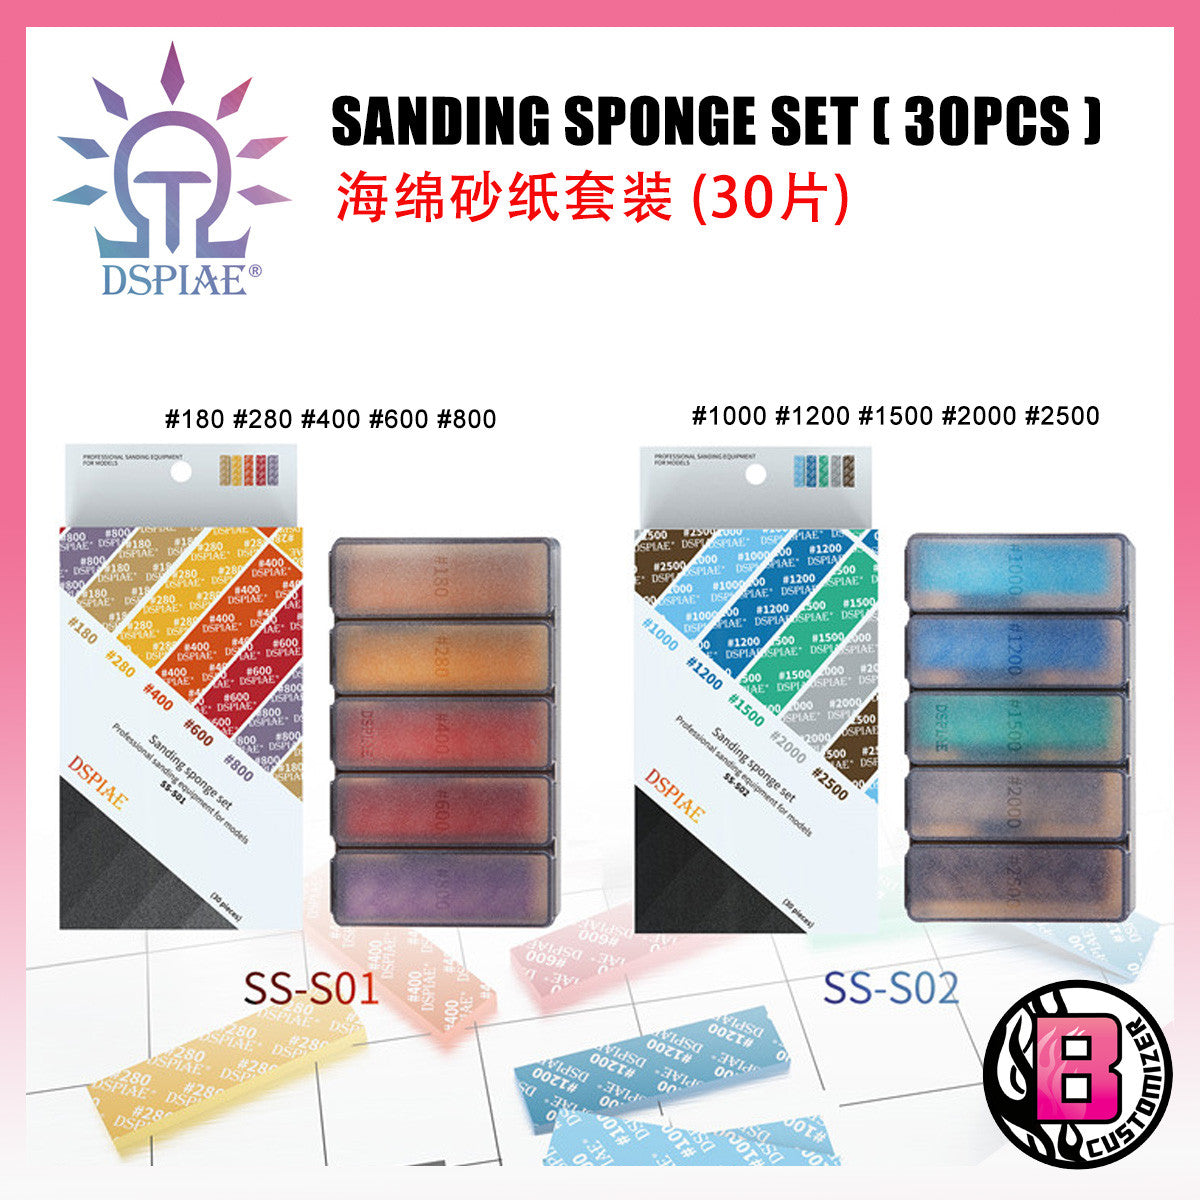 DSPIAE Sanding Sponge Set (30 set) SS-S01 & SS-S02